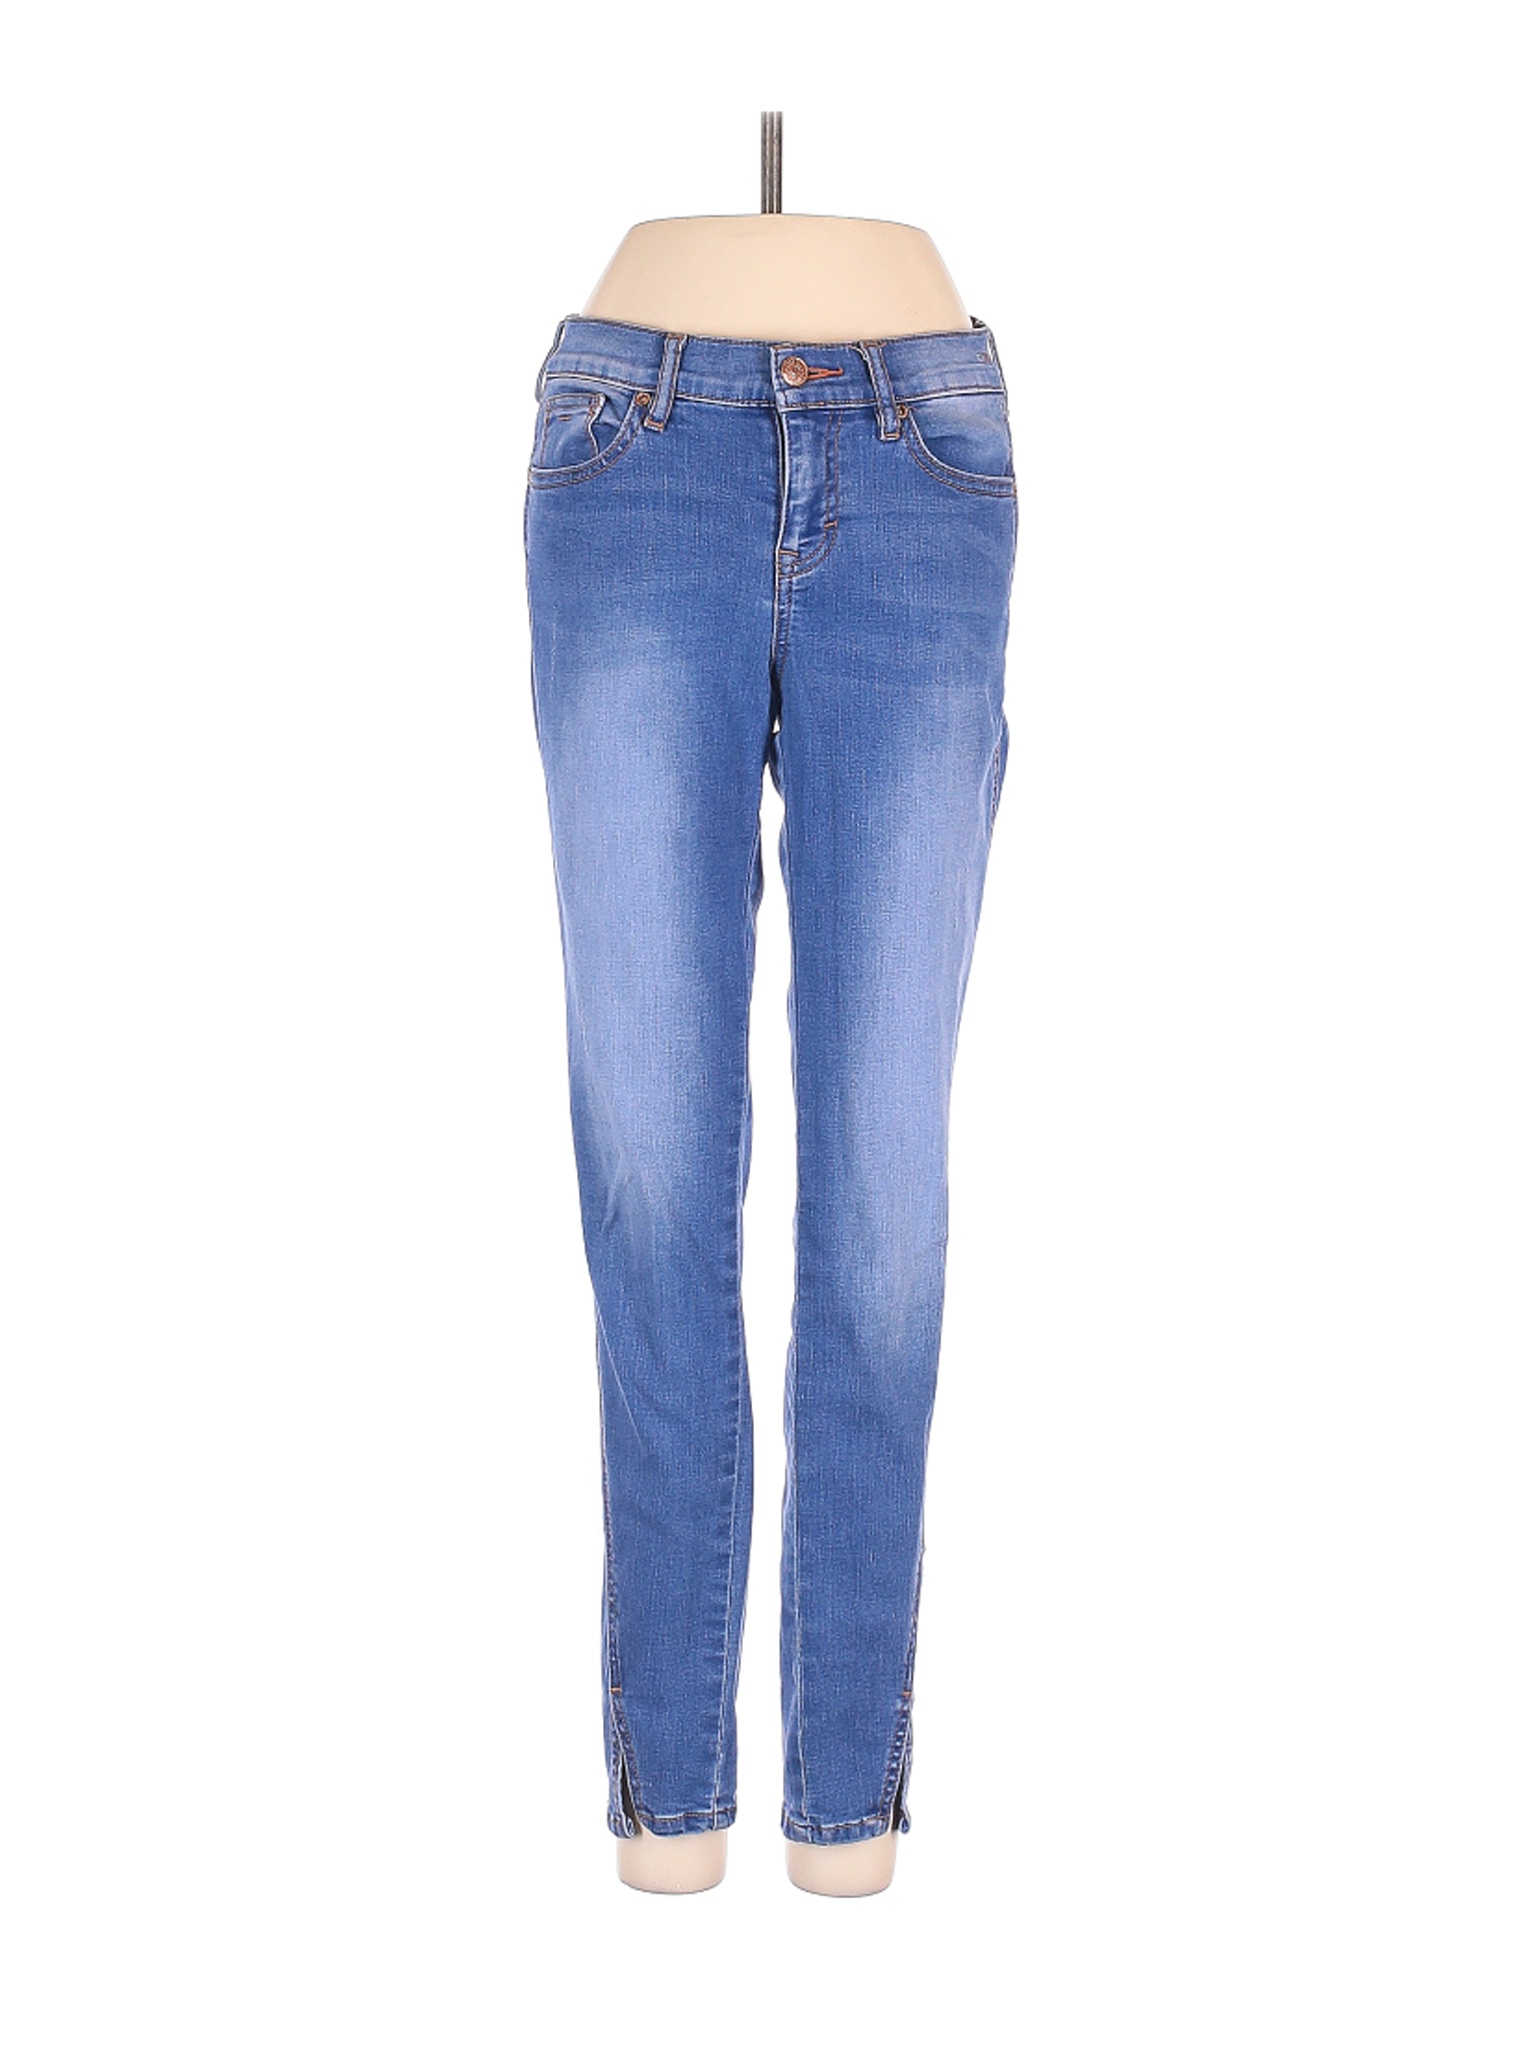 Dittos Women Blue Jeans 25W | eBay